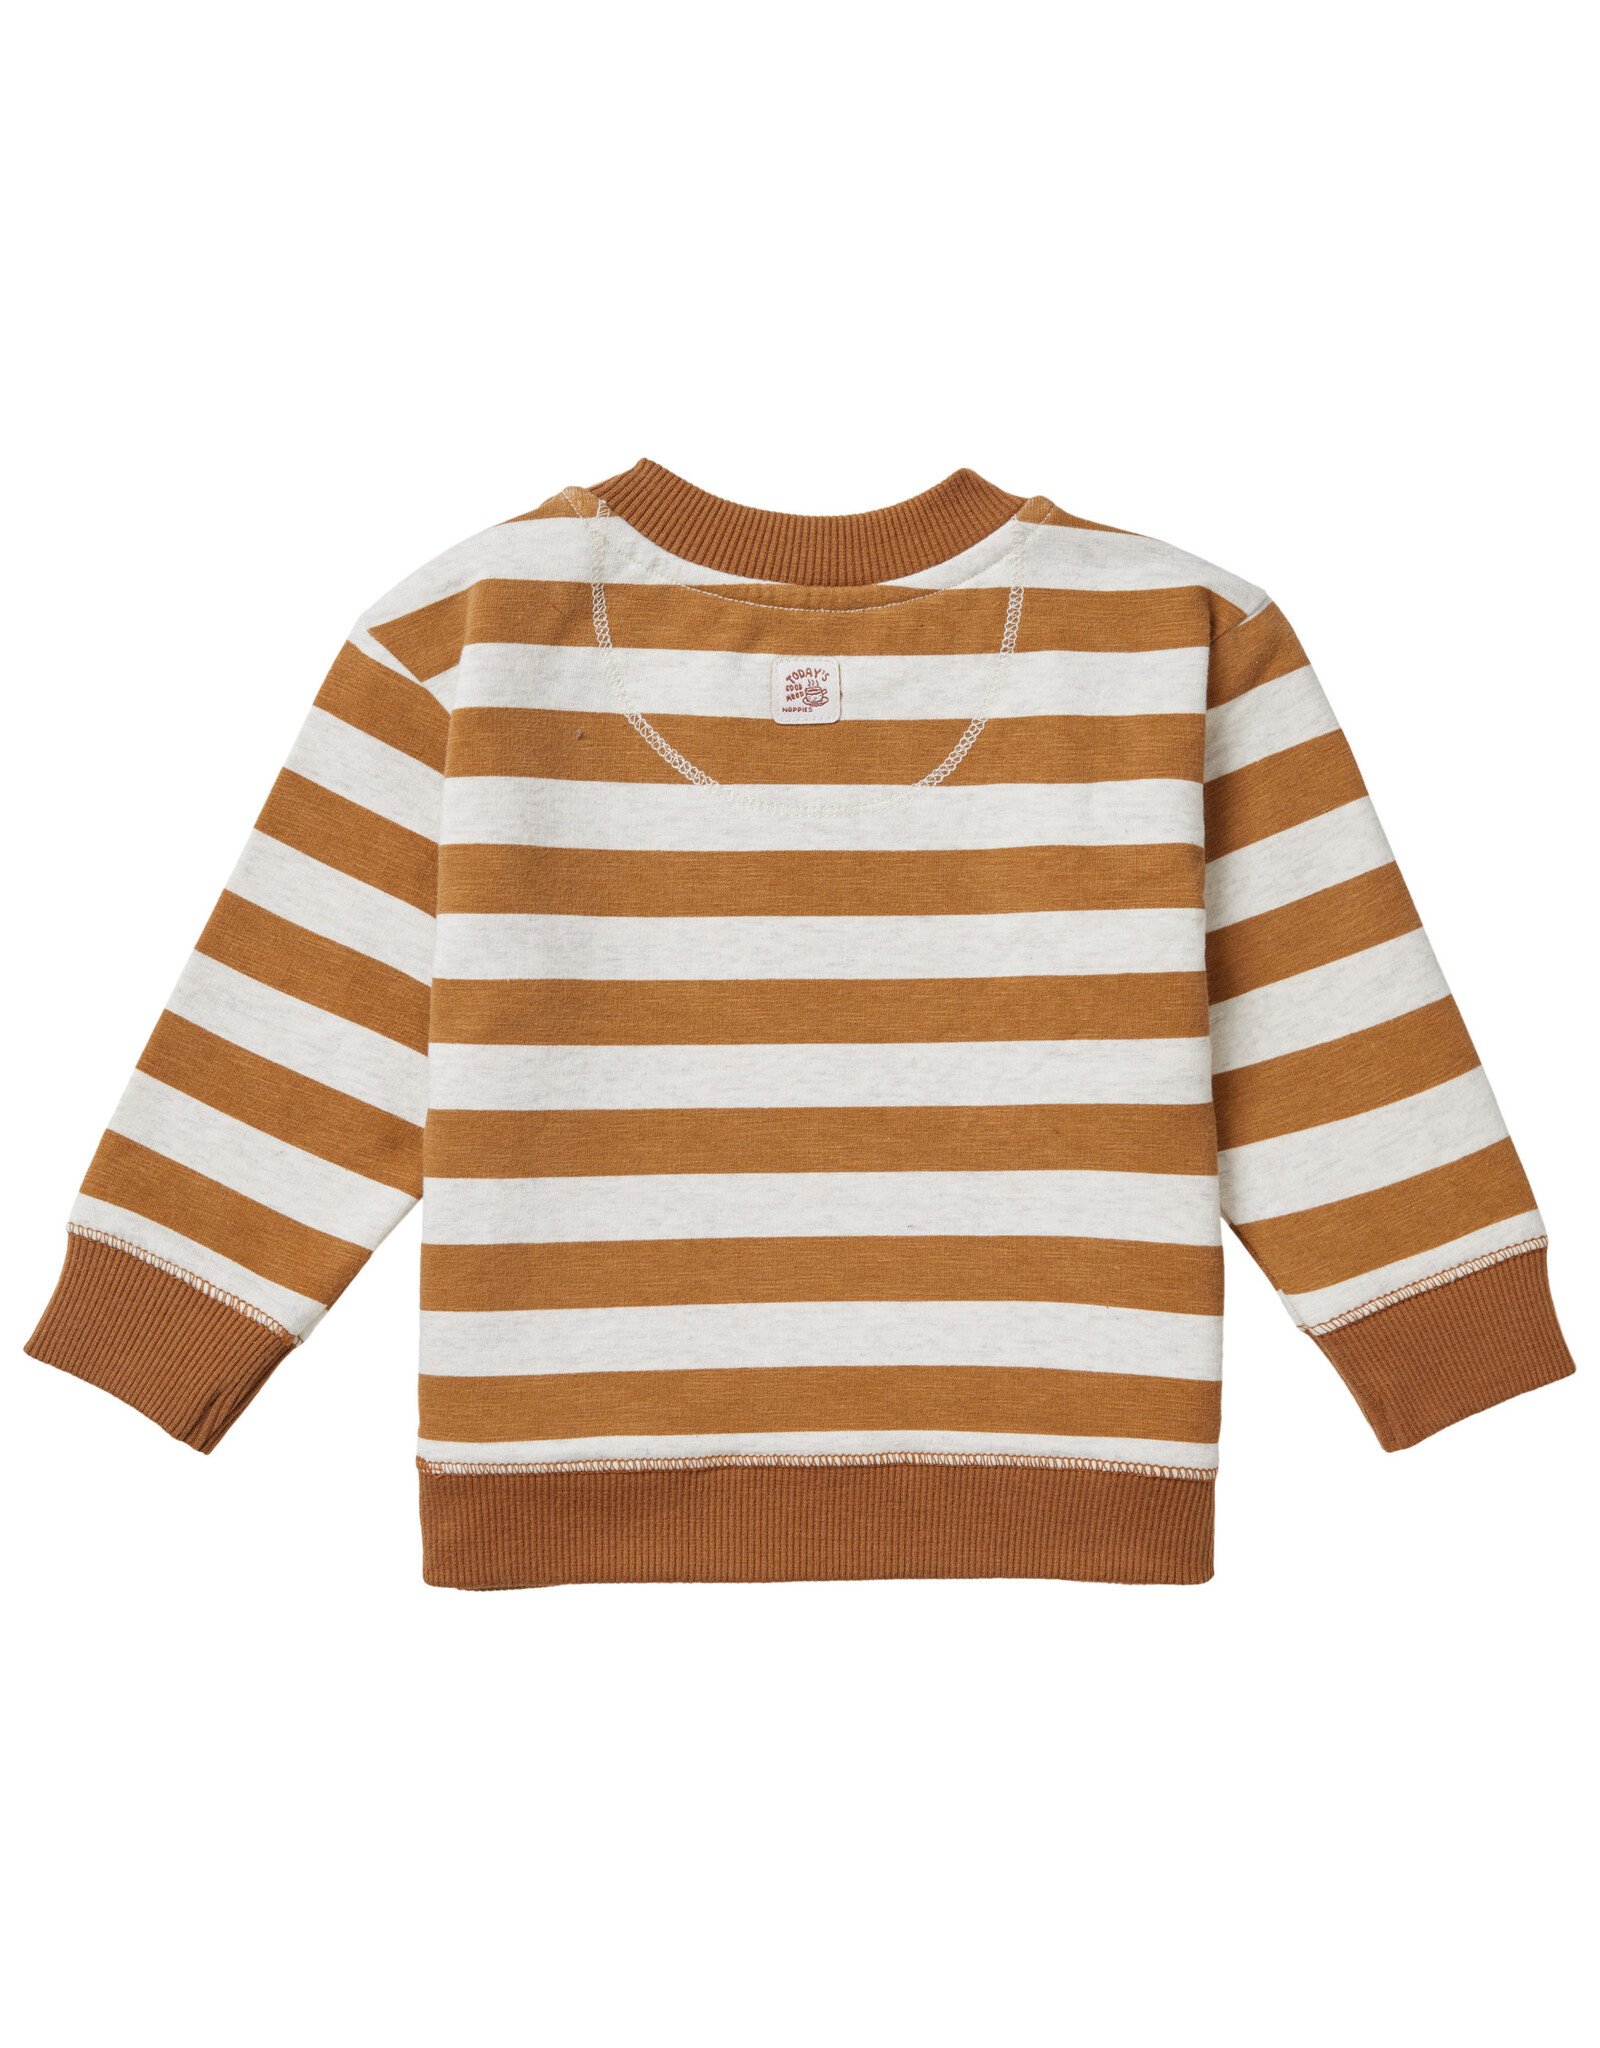 Noppies Boys sweater Tangerine long sleeve stripe Chipmunk